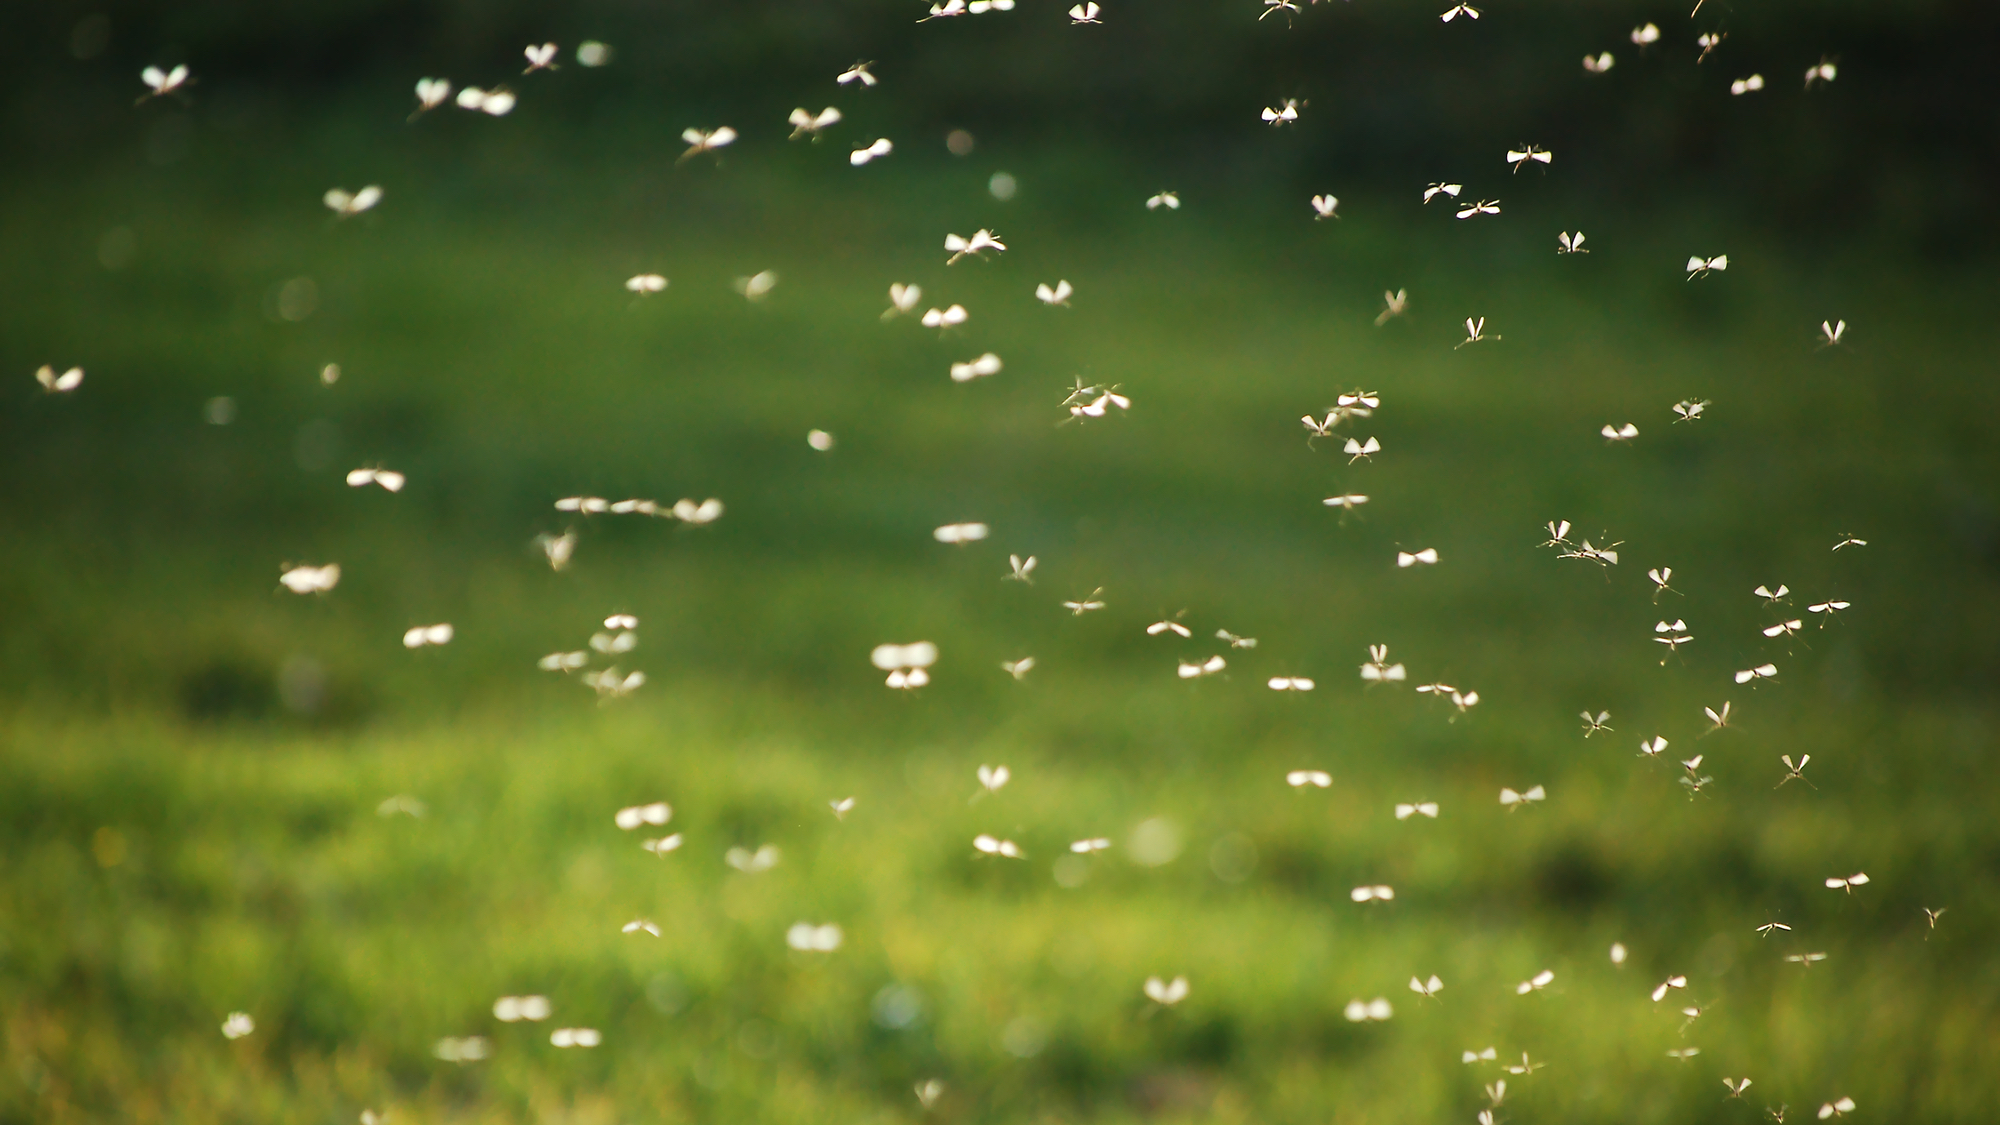 Swarm of mosquitos in flight in a grassy field